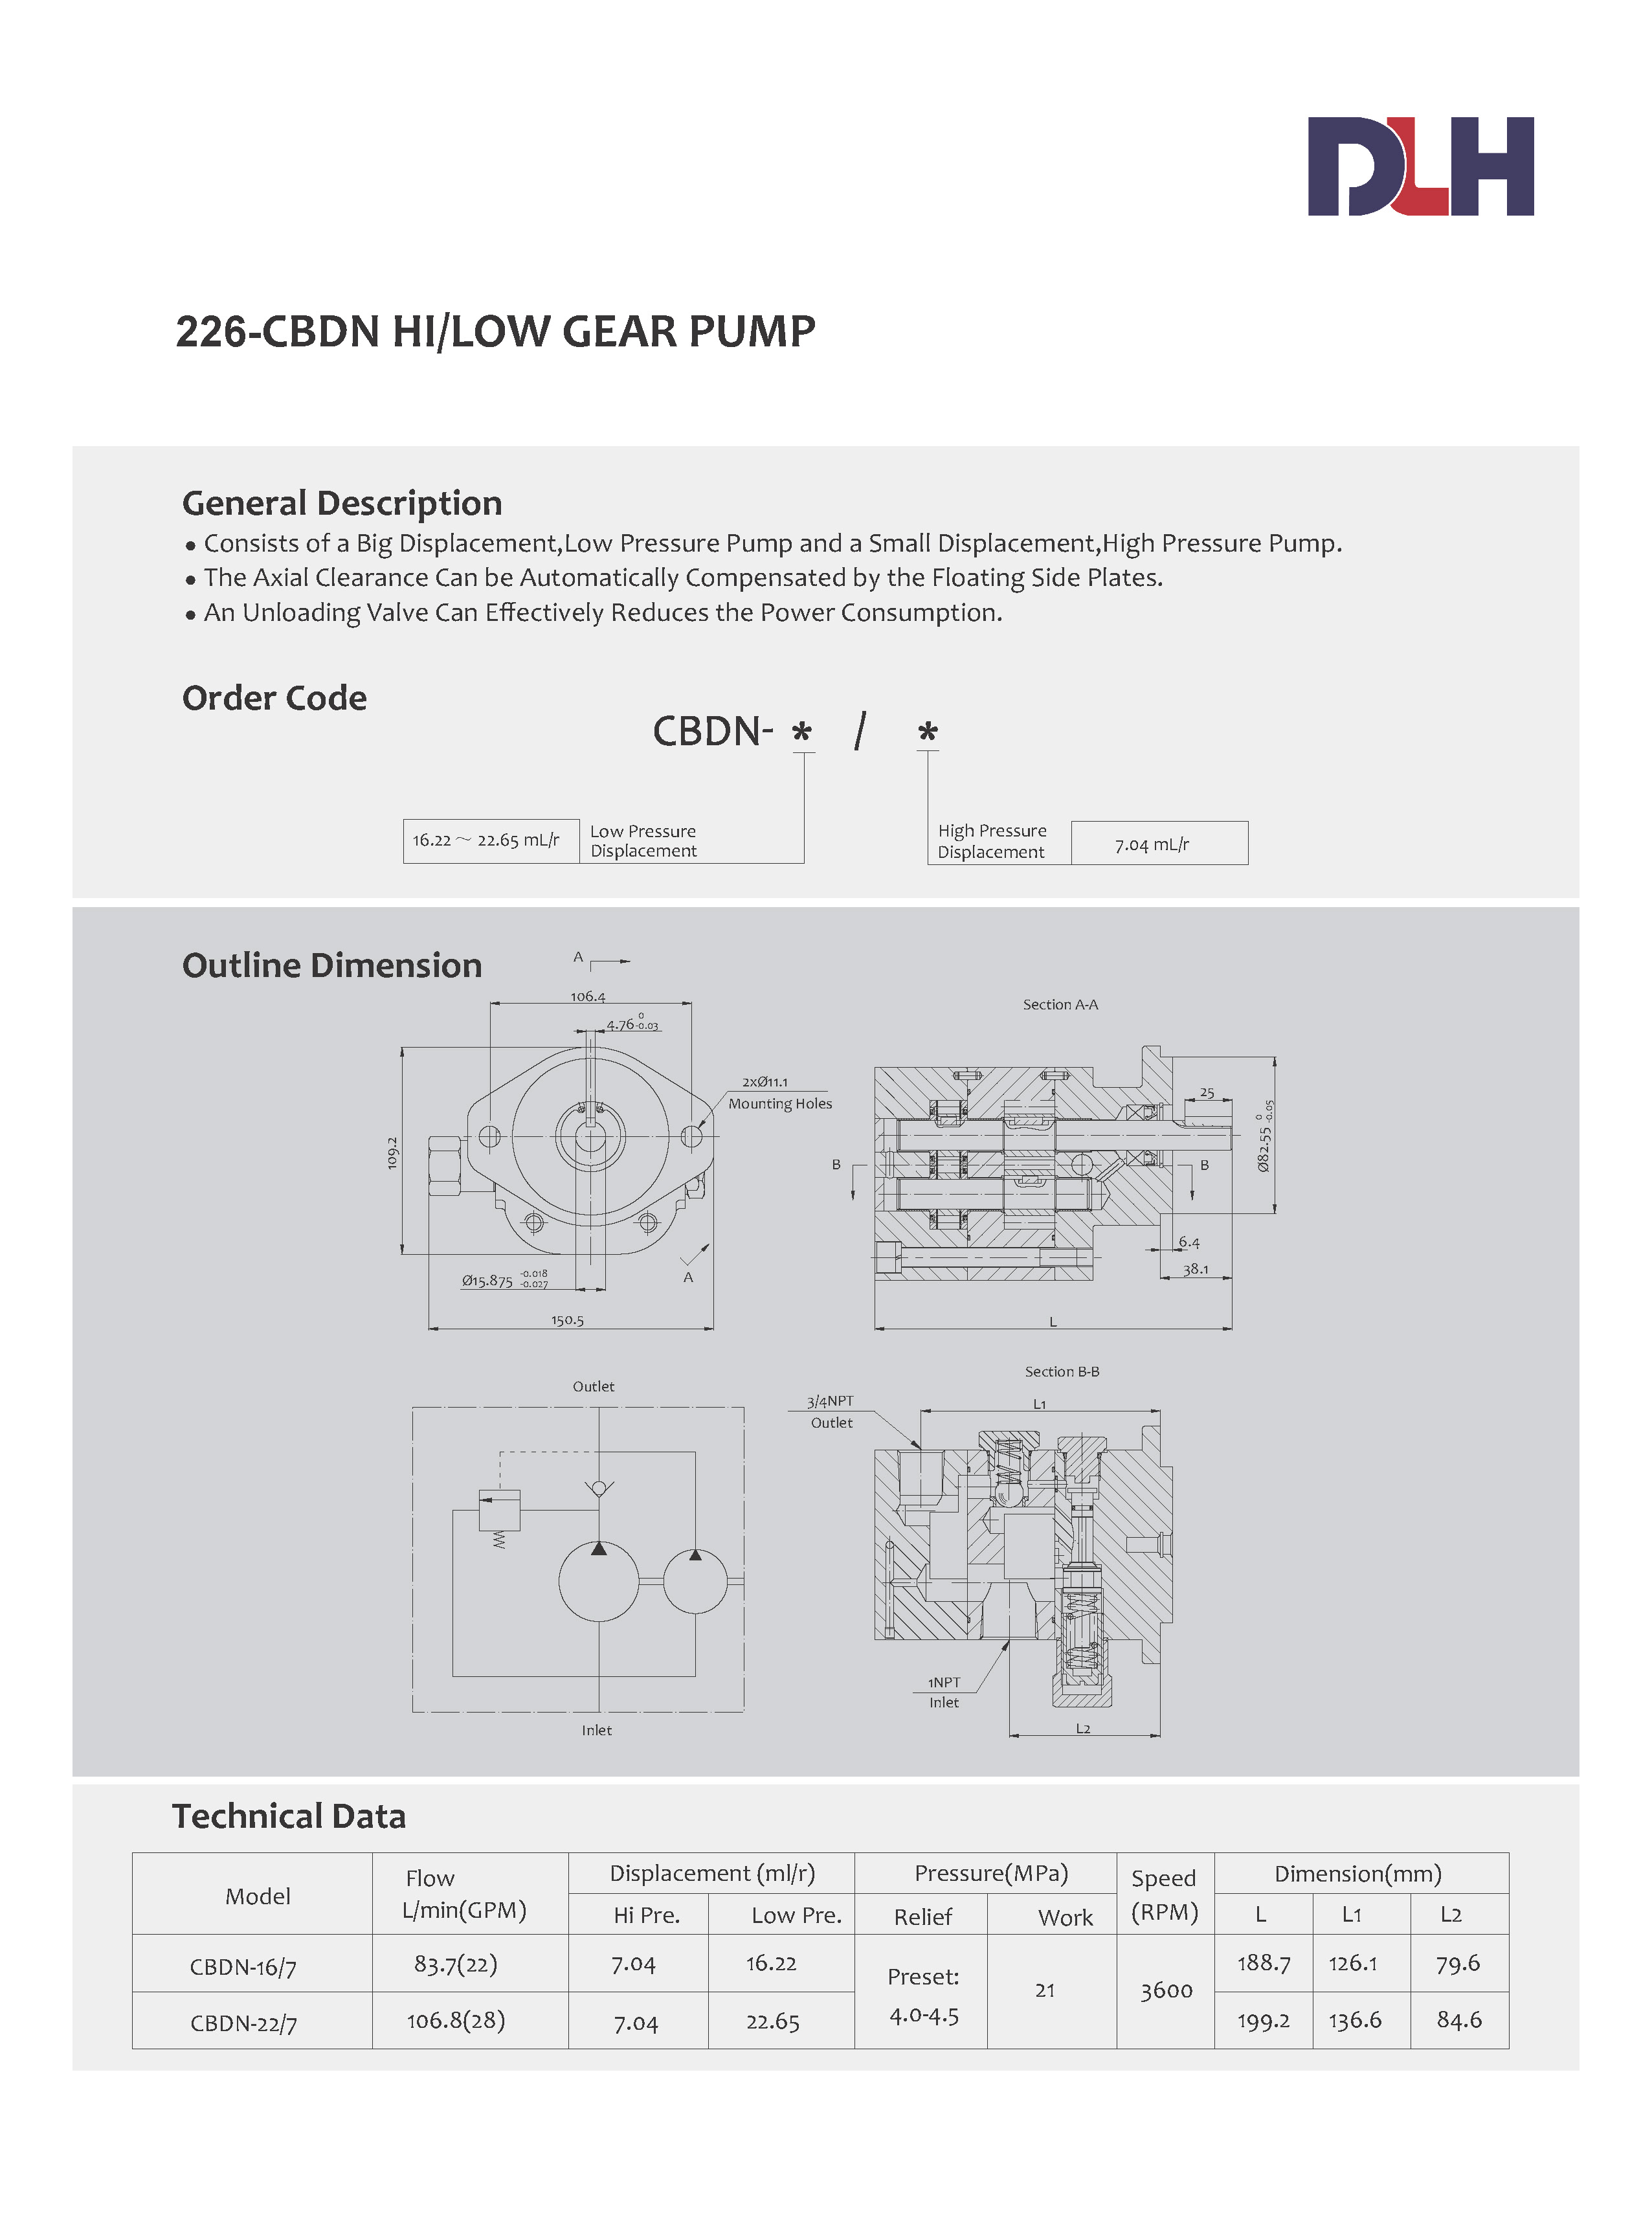 CBDN Hi-Low Gear Pumps